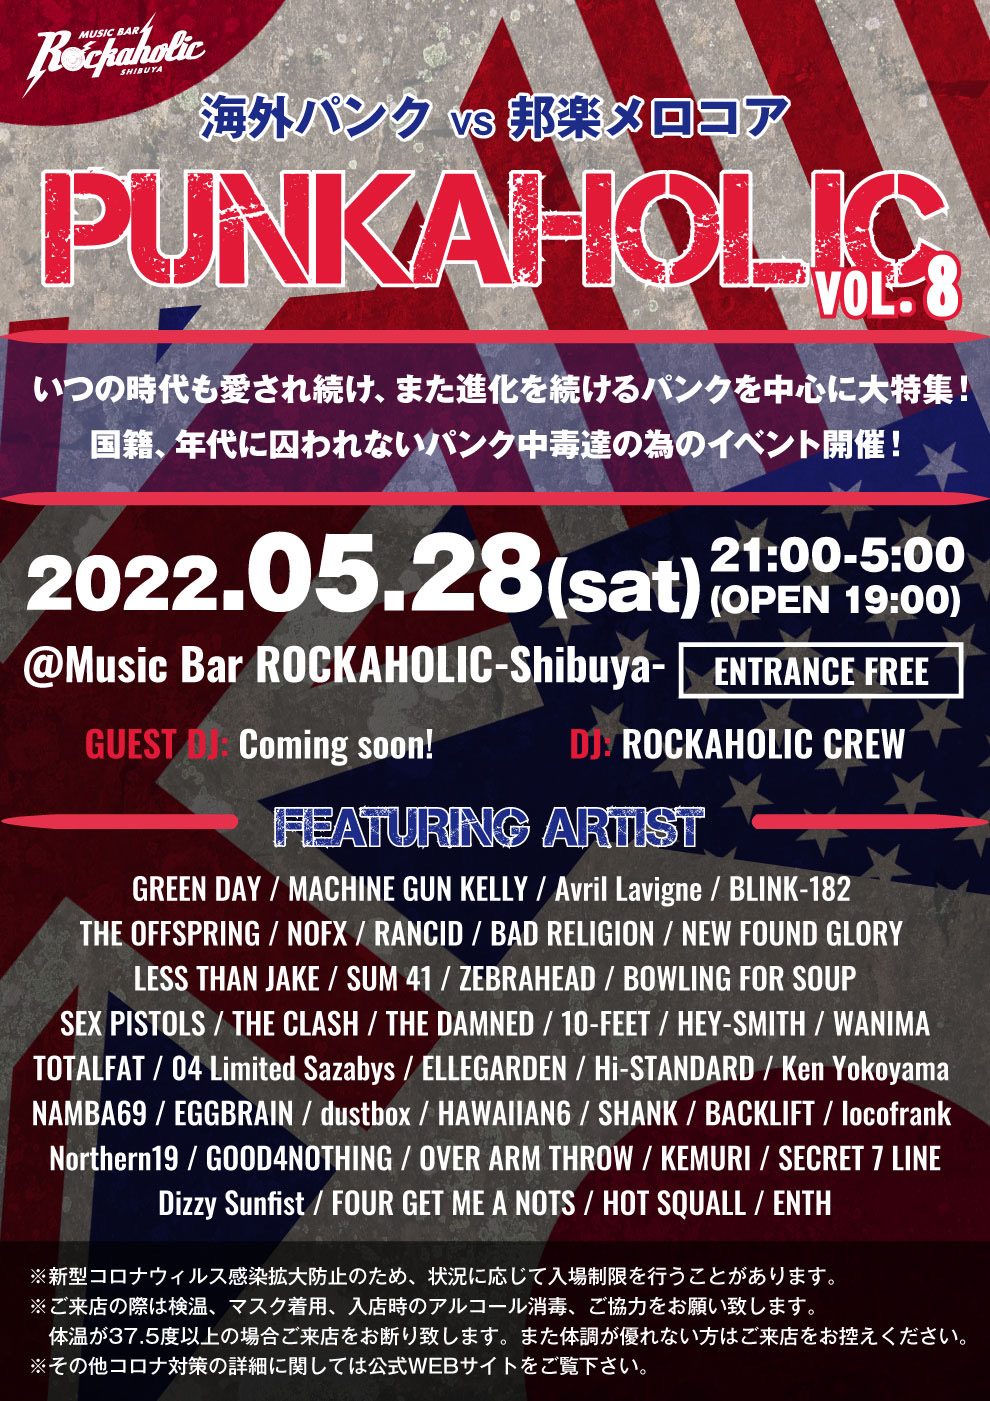 https://bar-rockaholic.jp/shibuya/blog/23BA212F-F930-4854-A454-D6D9ED15FB1C.jpeg